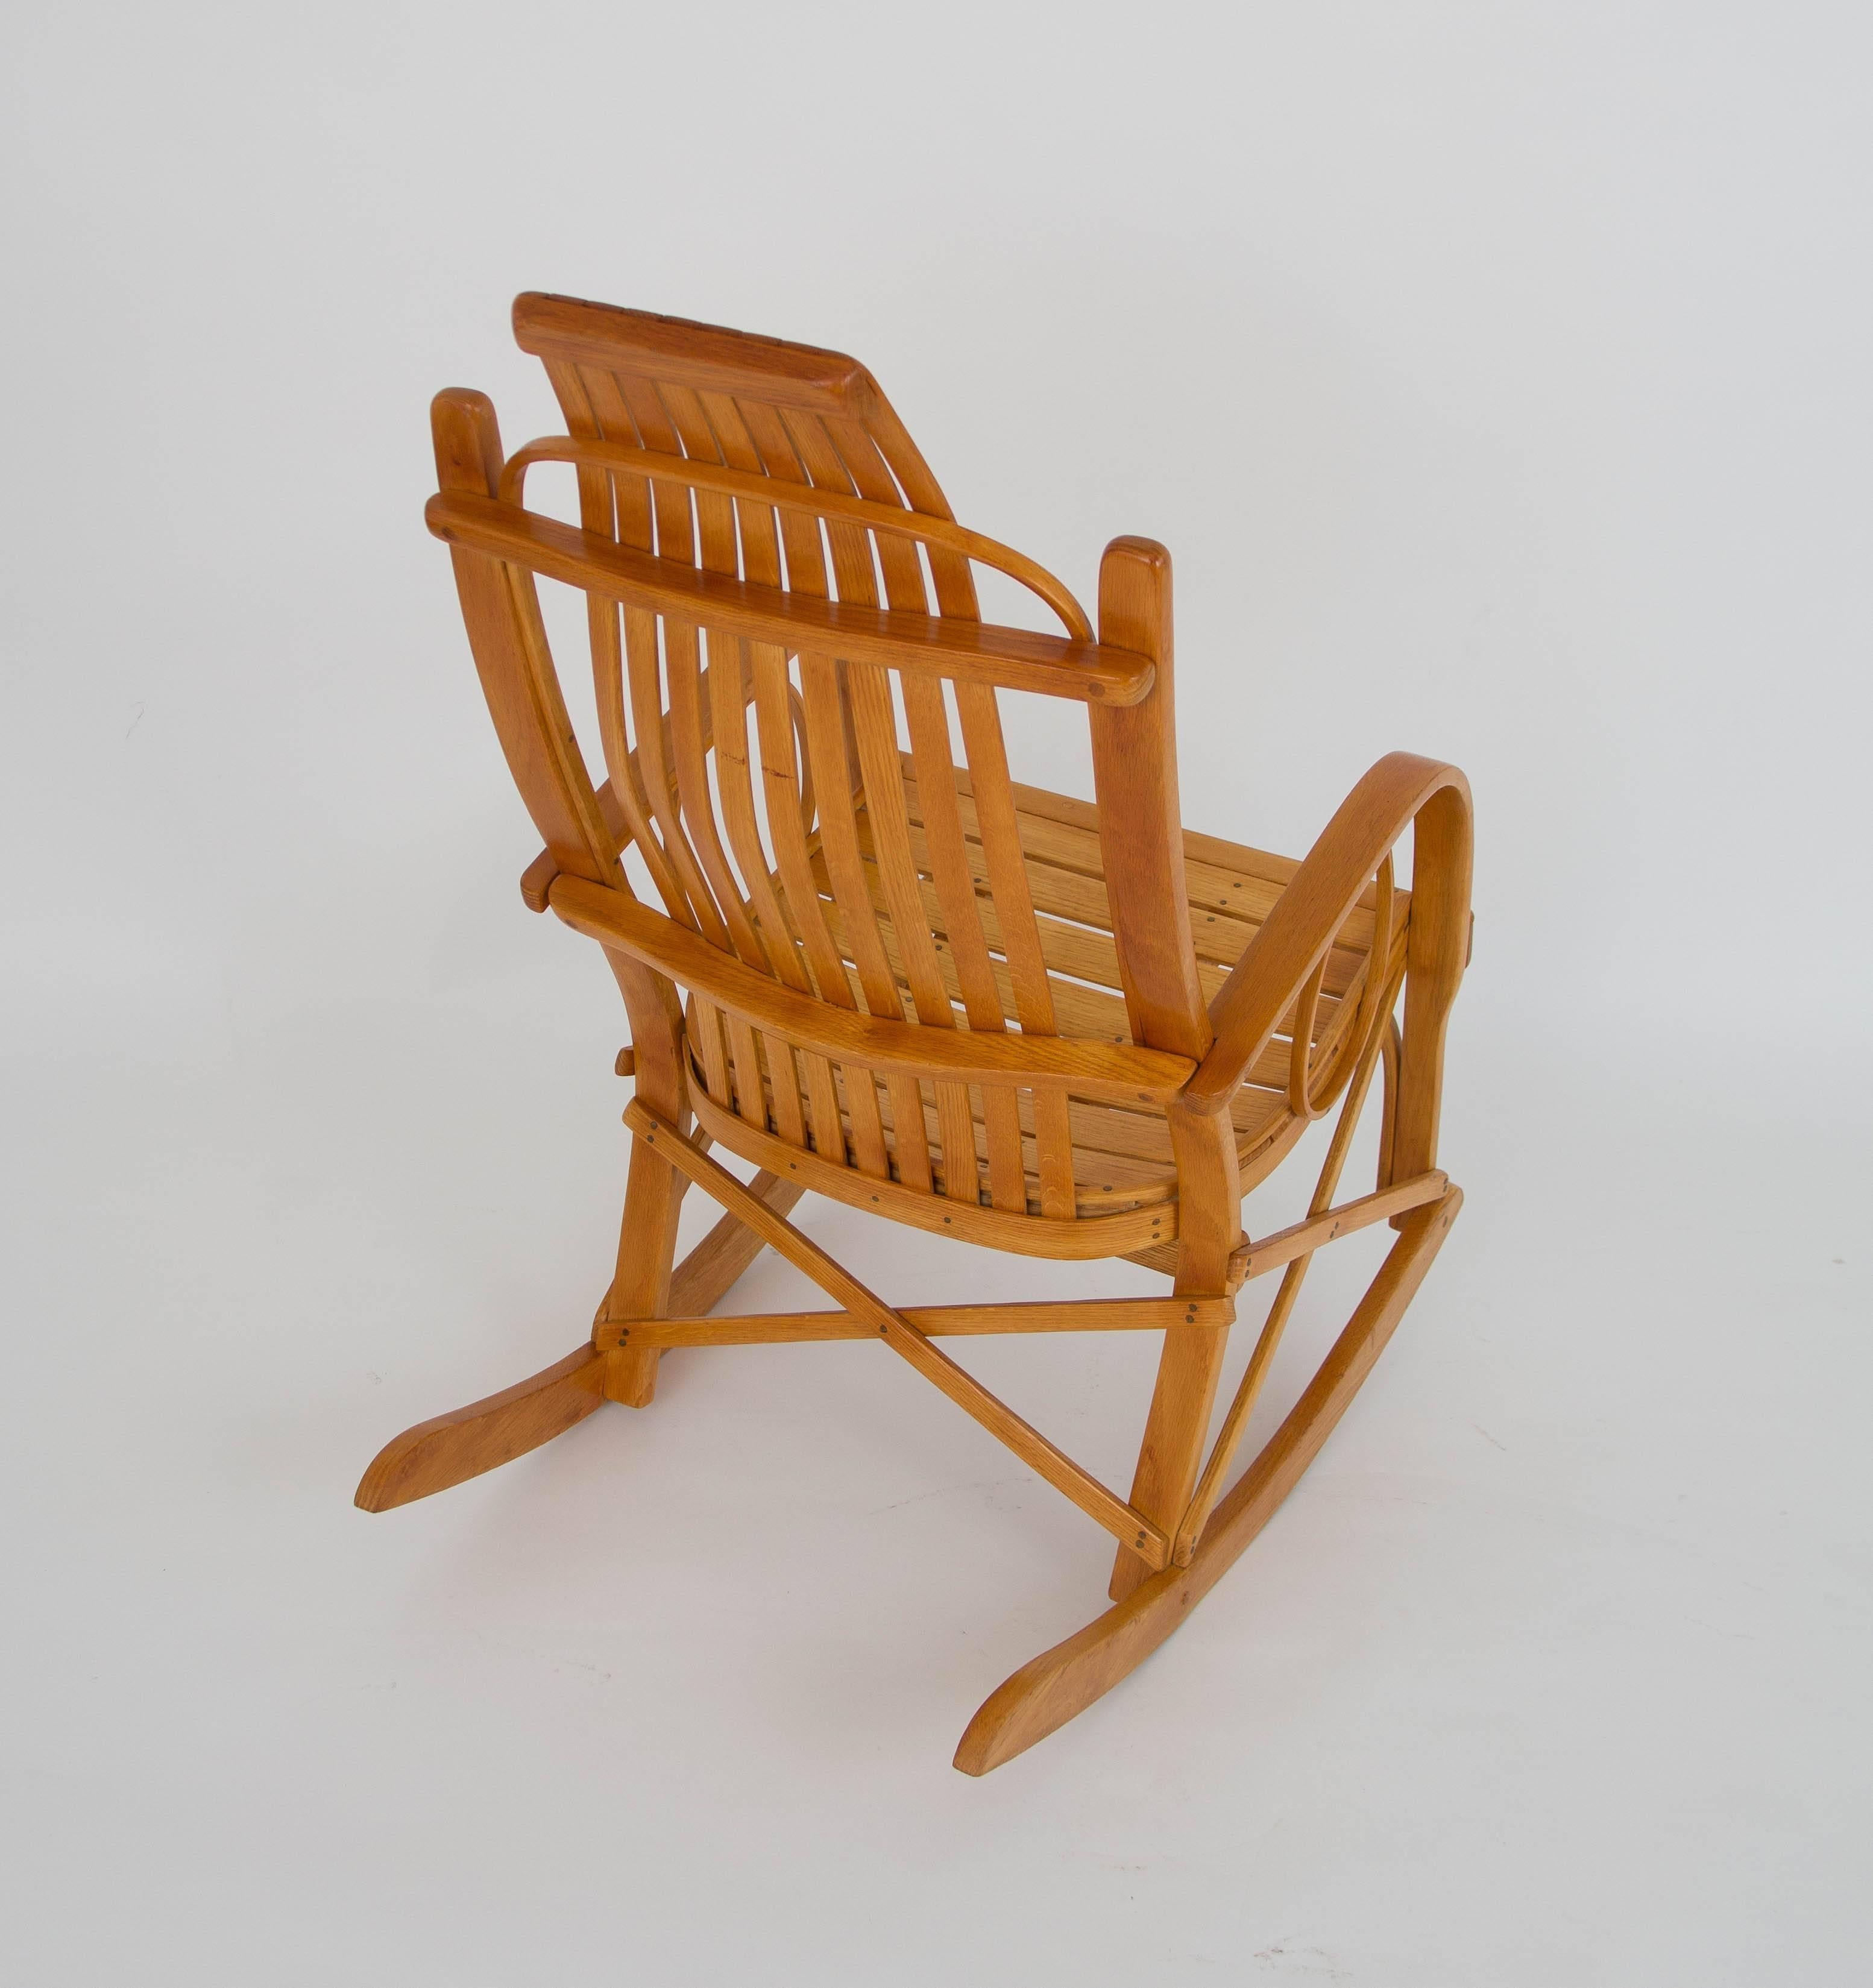 American Craftsman Bentwood Adirondack Rocking Chair with Slatted Seat